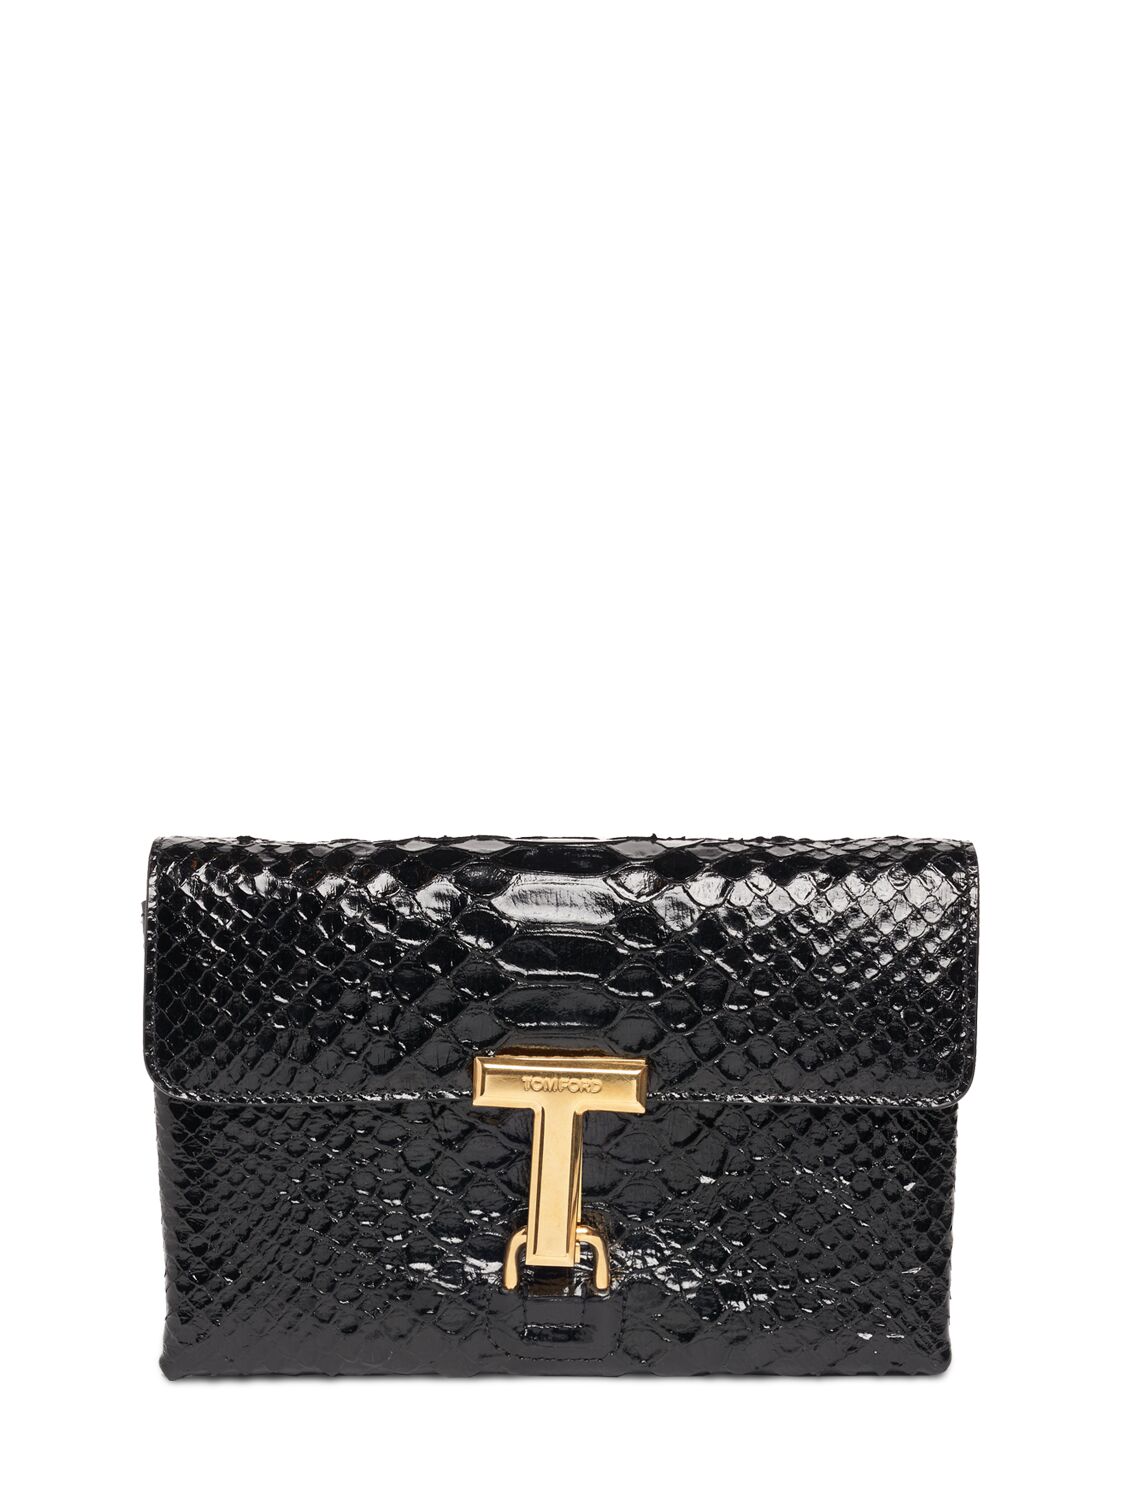 Tom Ford Mini Glossy Snake Embossed Leather Bag In Black